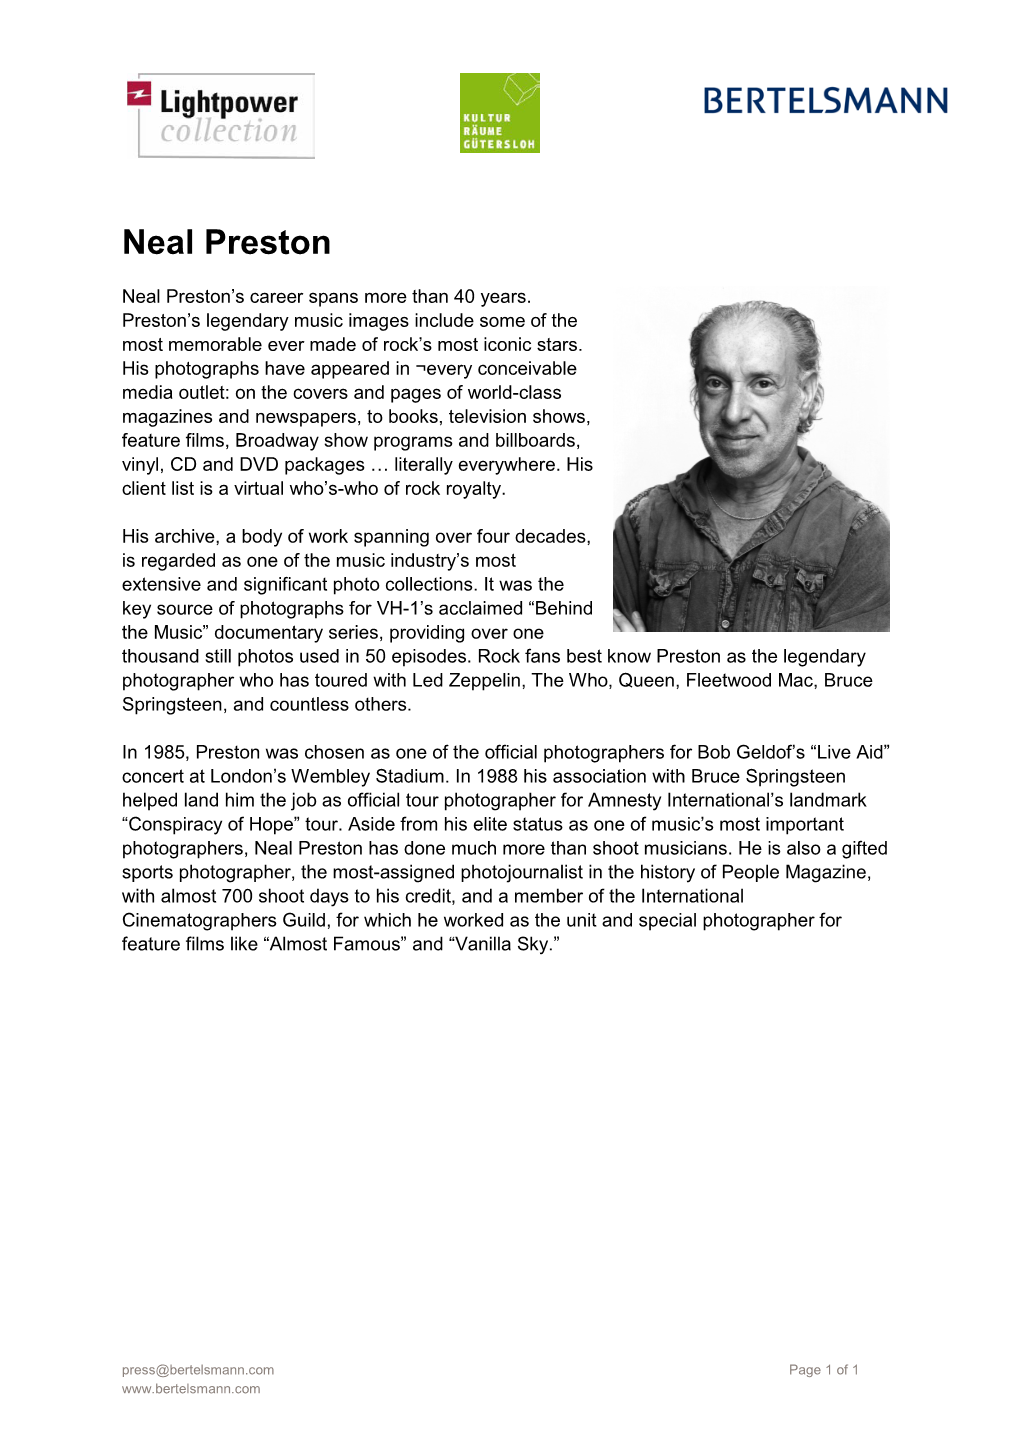 Biography Neal Preston